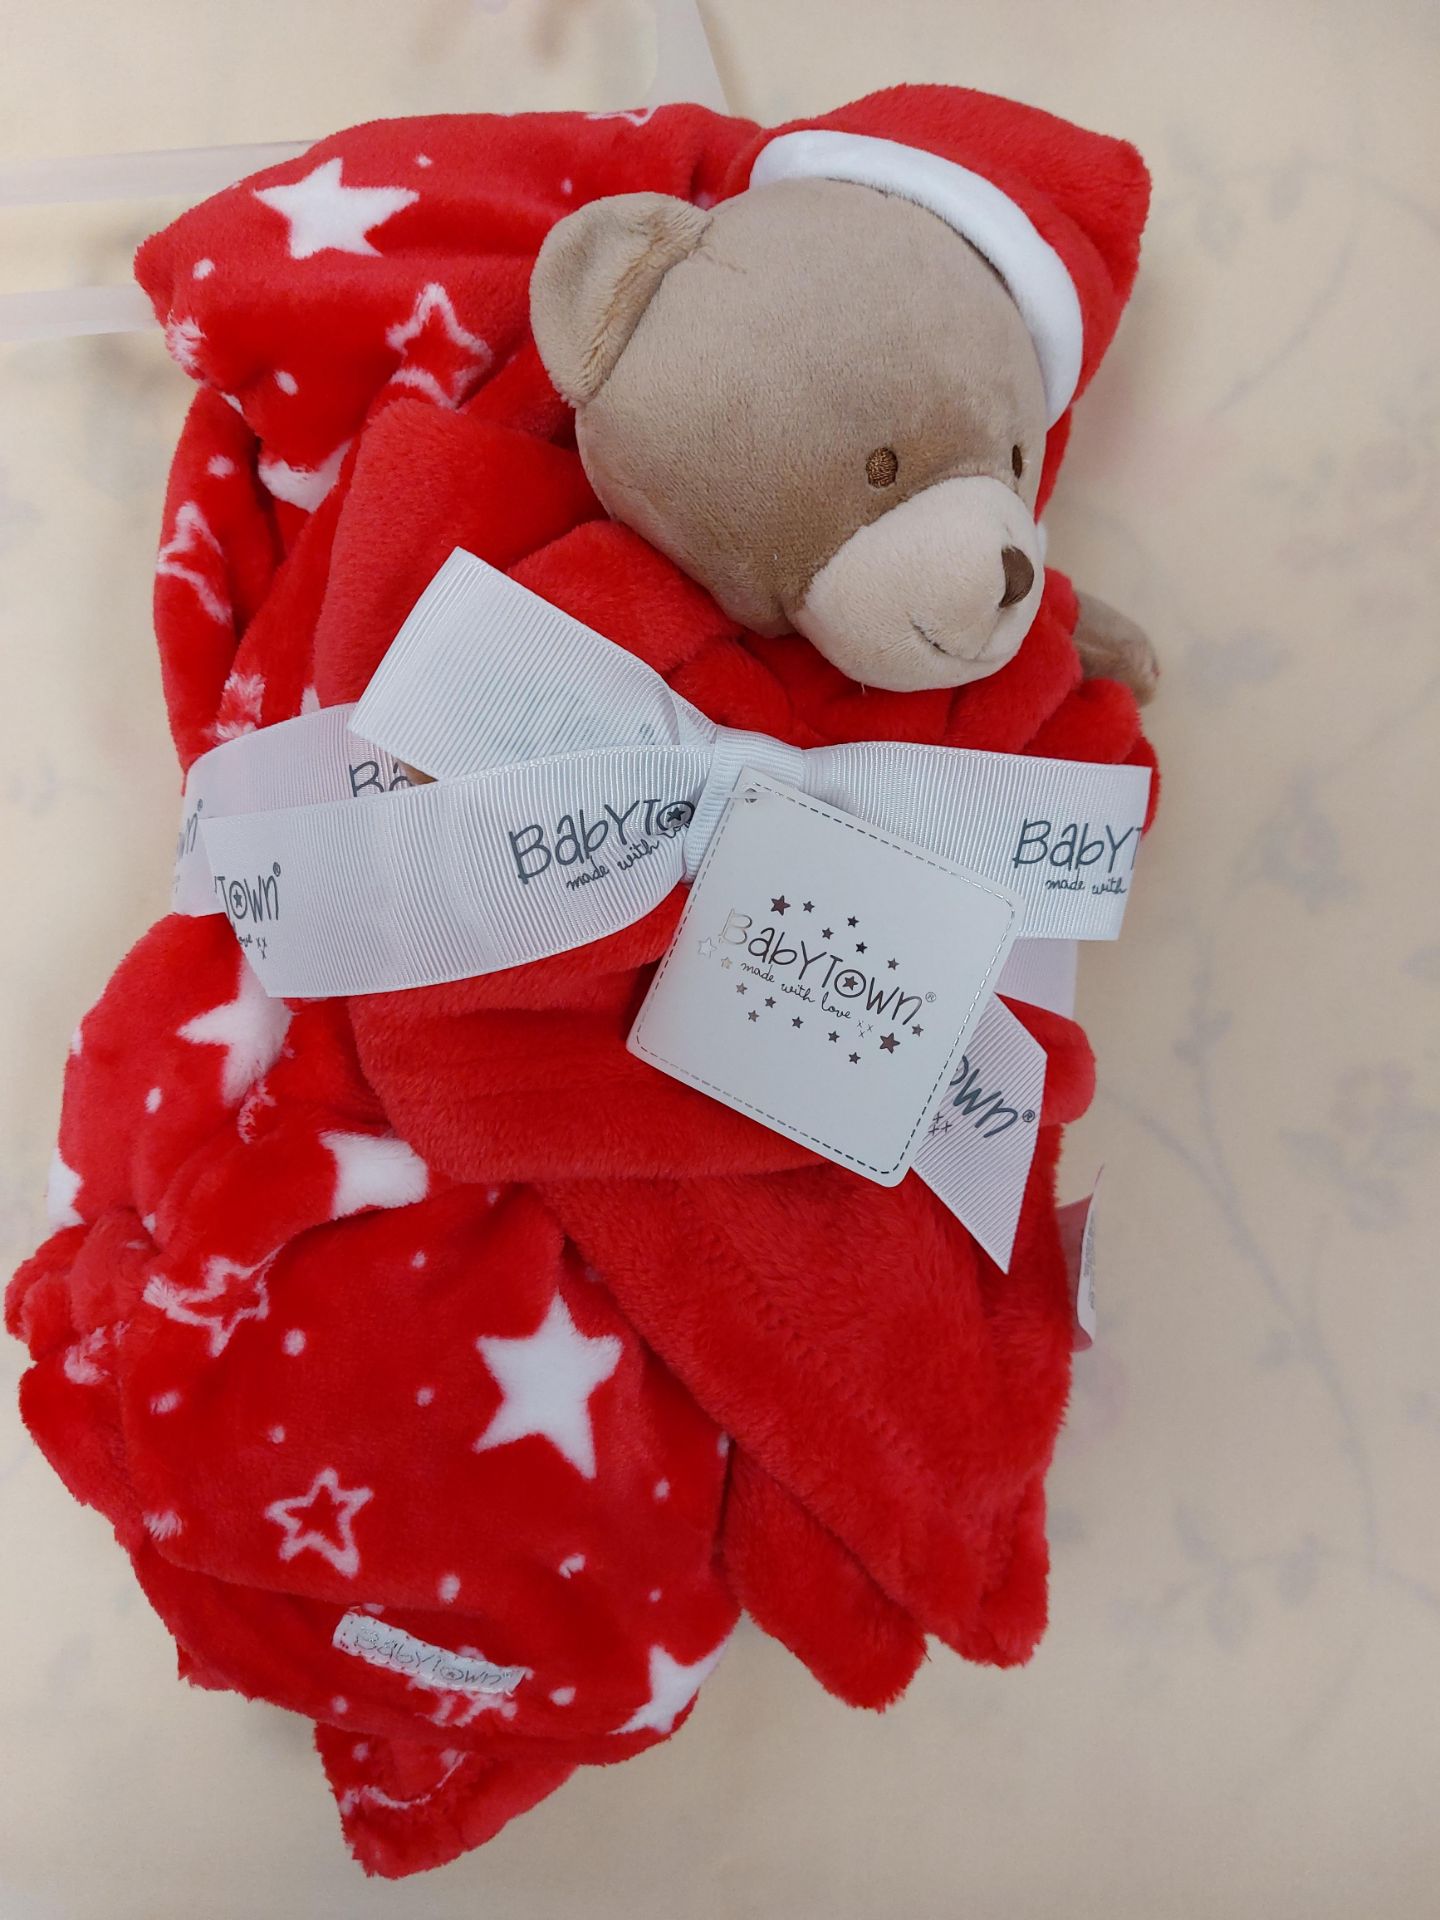 Baby Fleece and Comforter With Xmas Balloons - Image 2 of 8